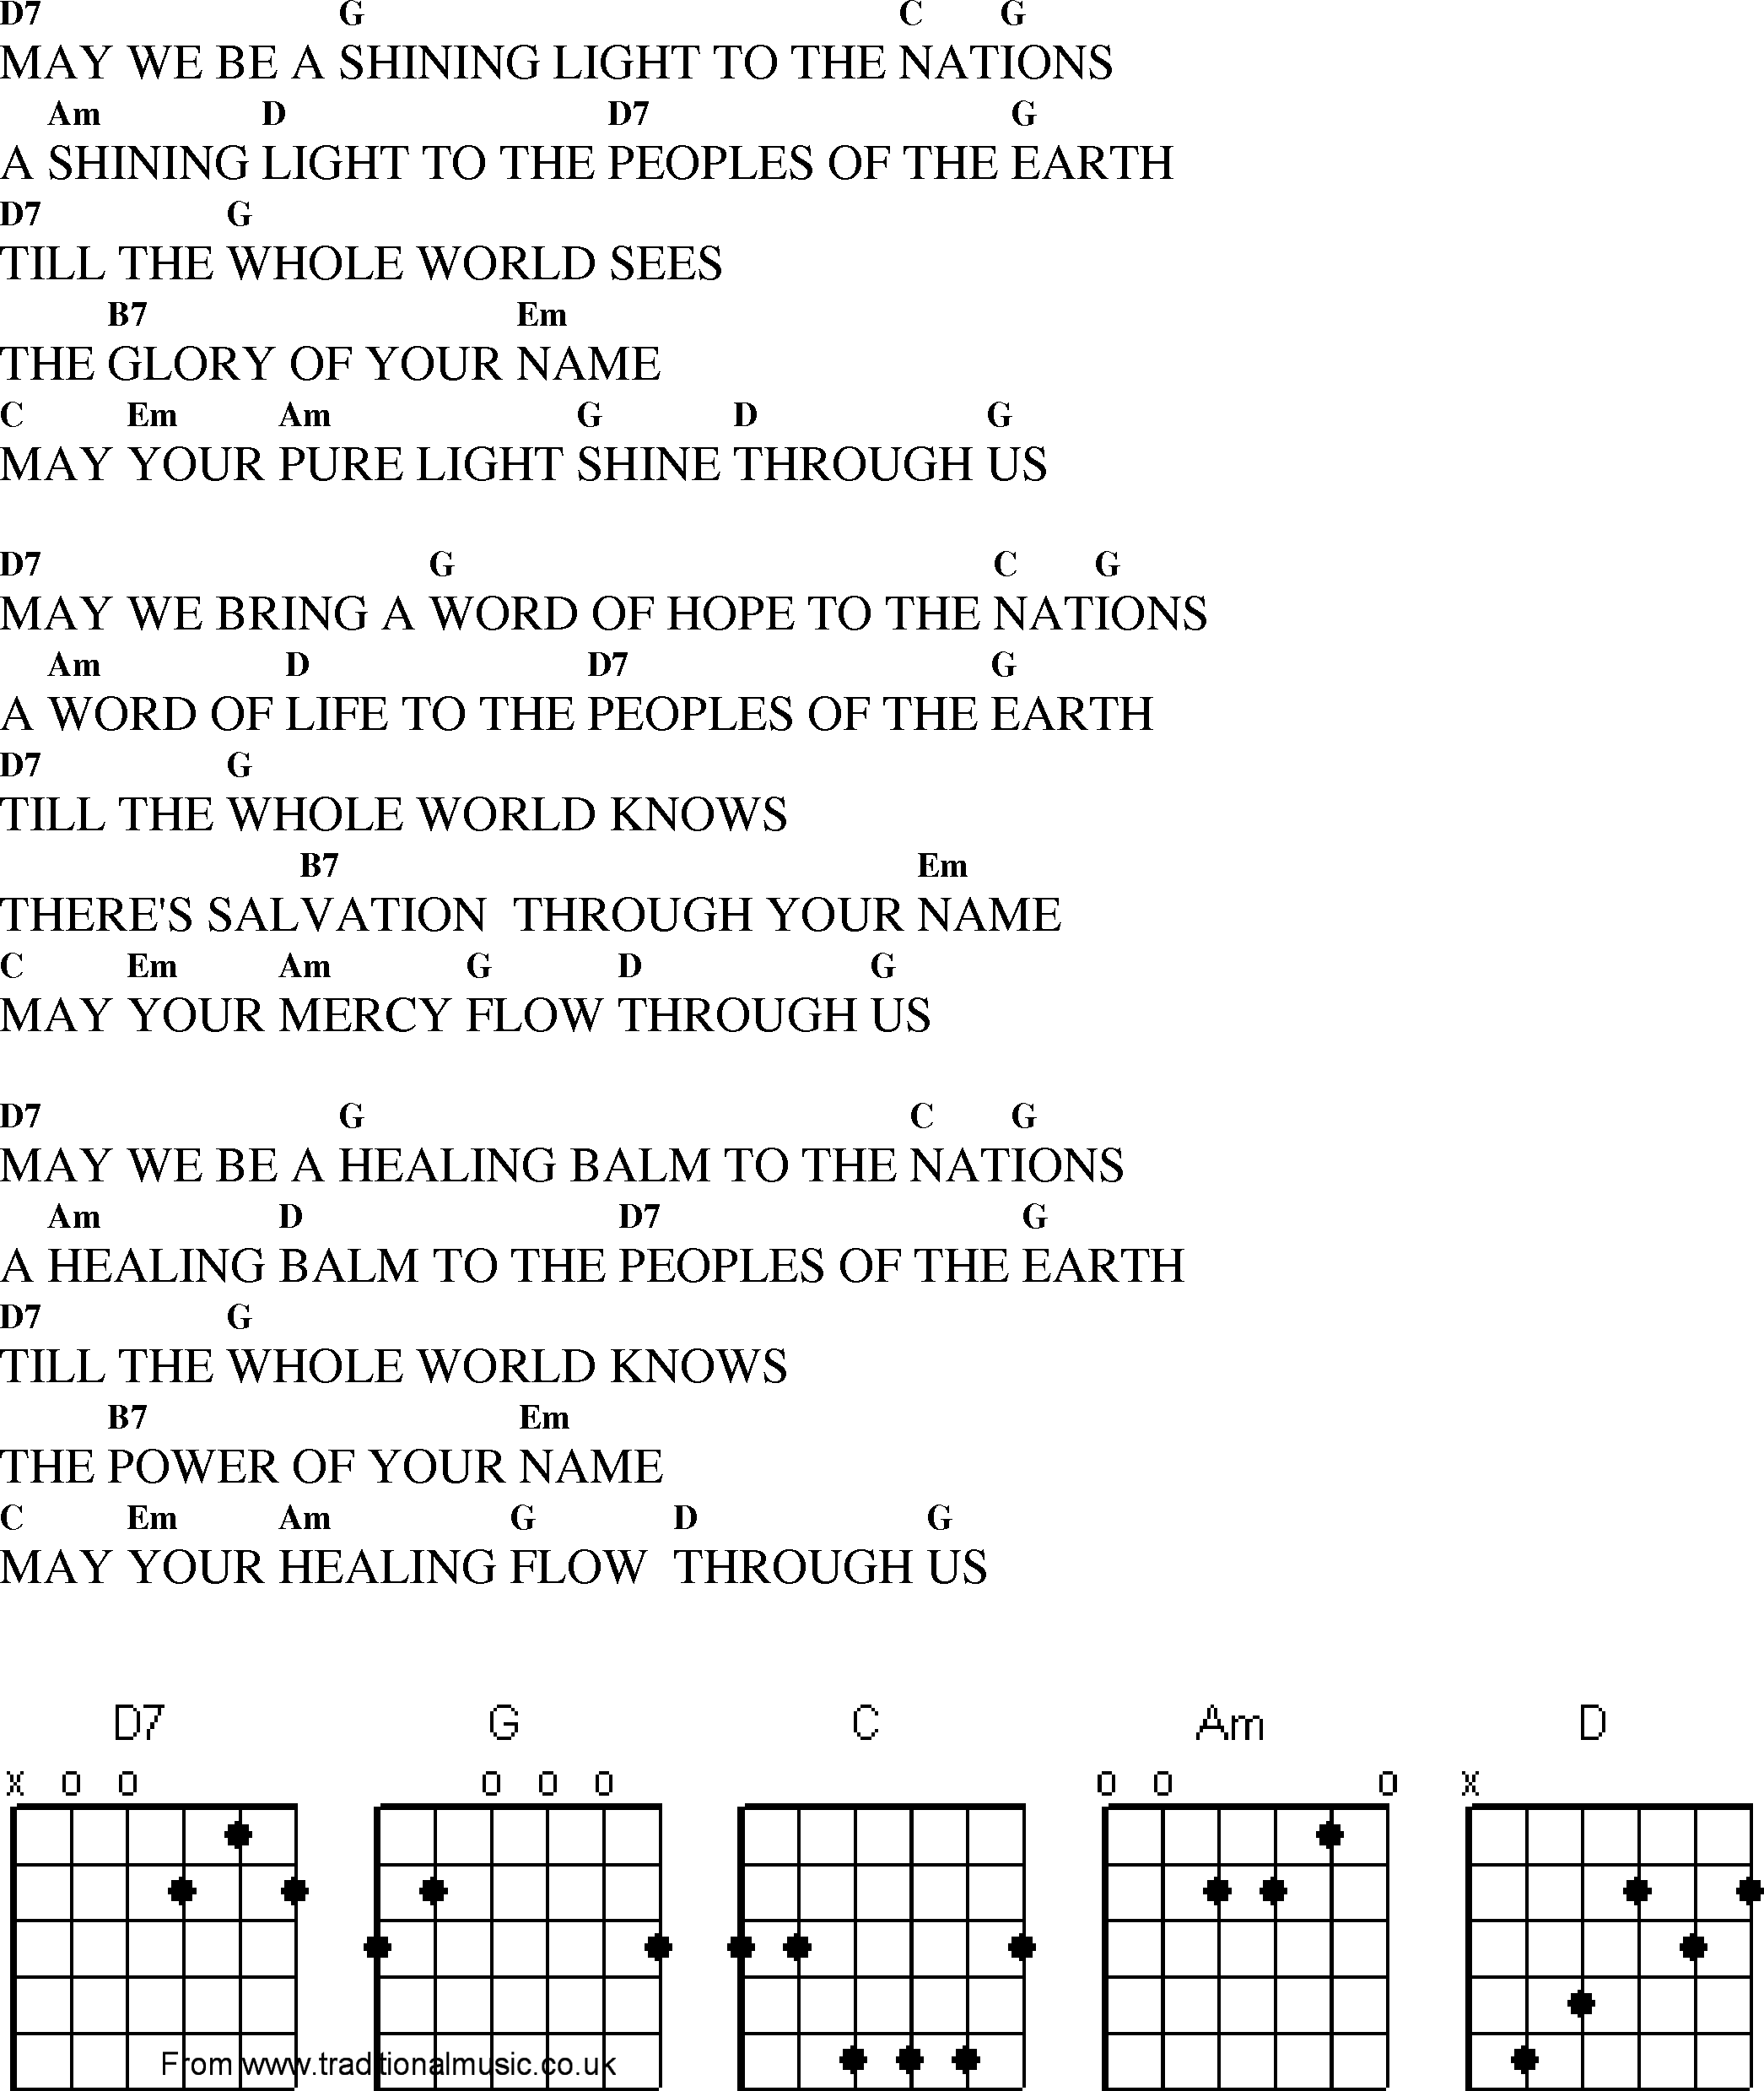 Gospel Song: my_we_be__shining_light, lyrics and chords.